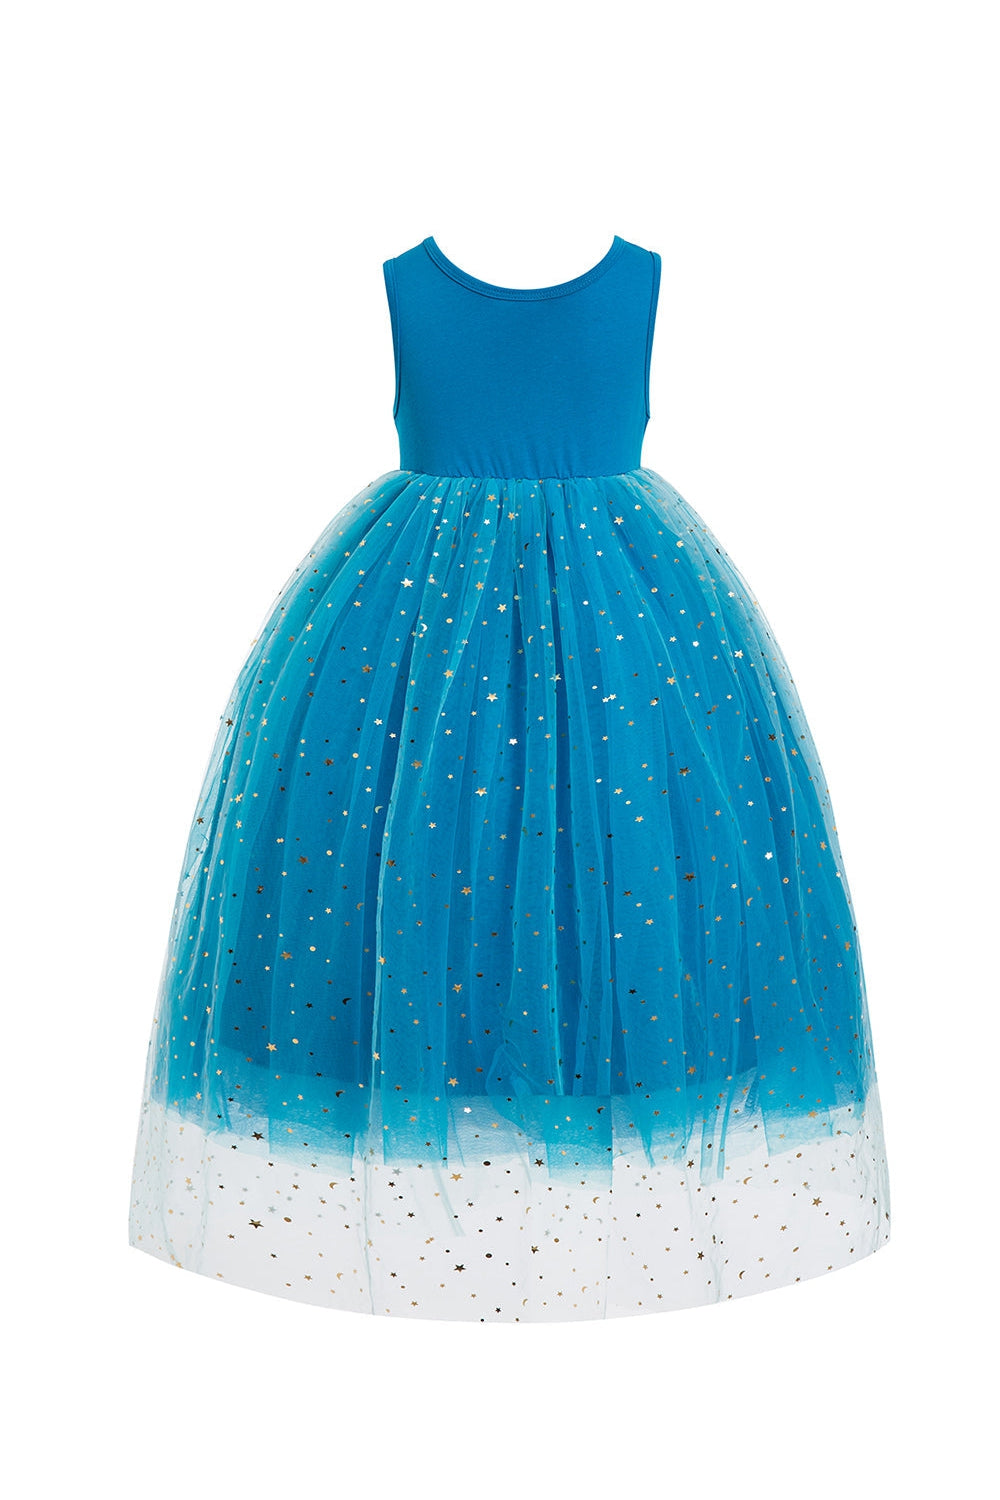 Princess TuTu dress - Fancy Dress Halloween - Be your own Princess - Elsa